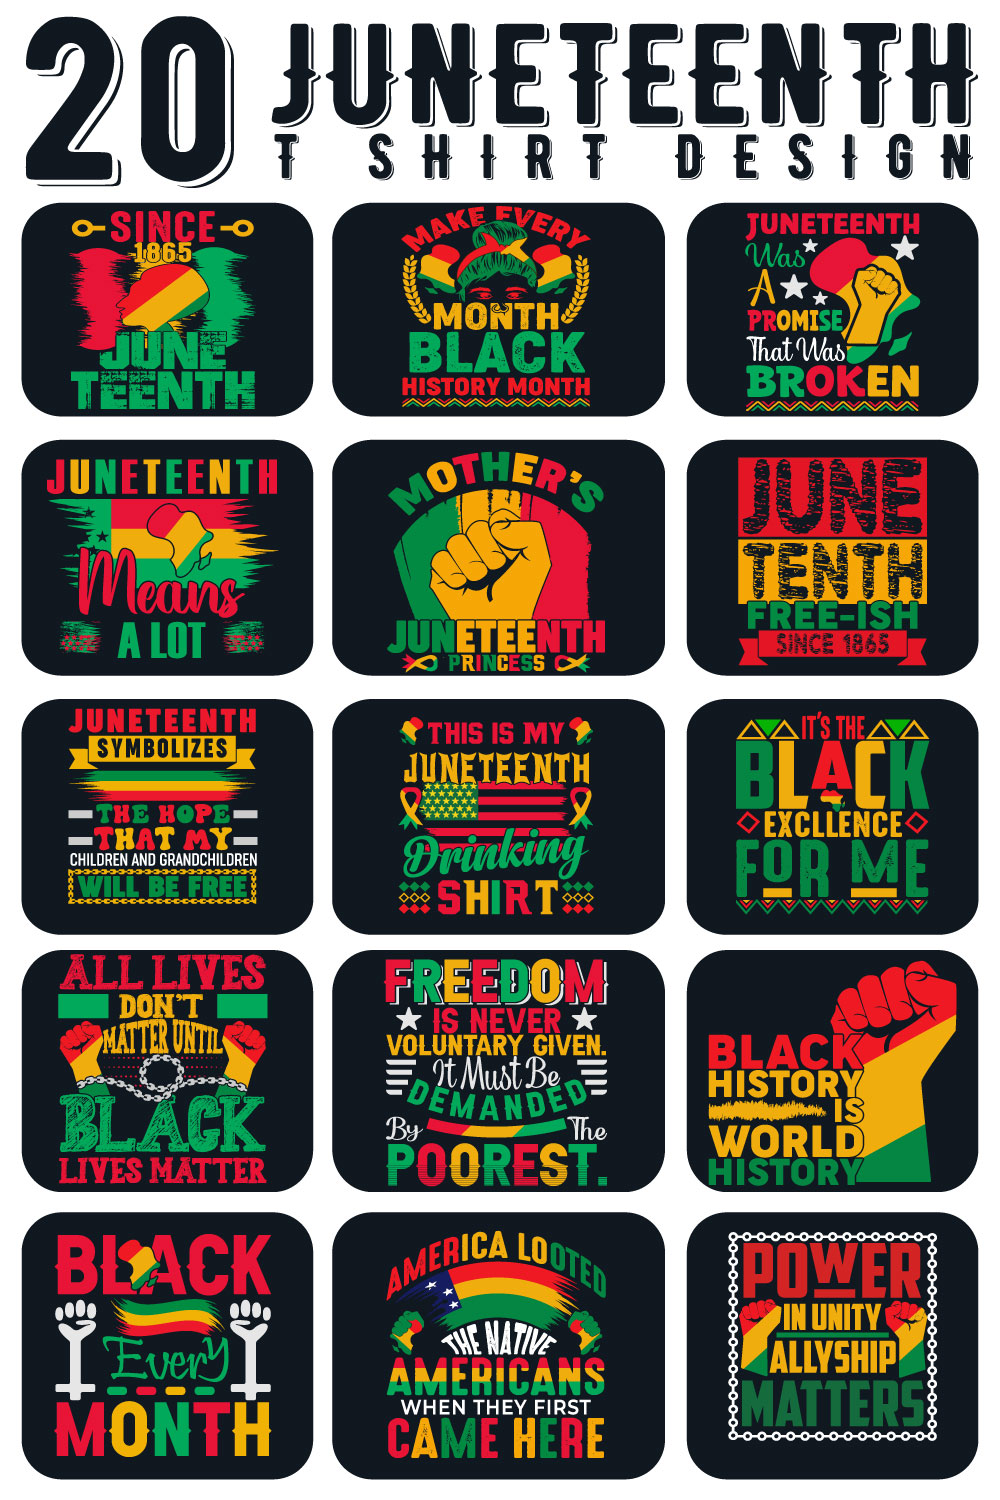 20 Juneteenth black history month typography t shirt design bundle pinterest preview image.